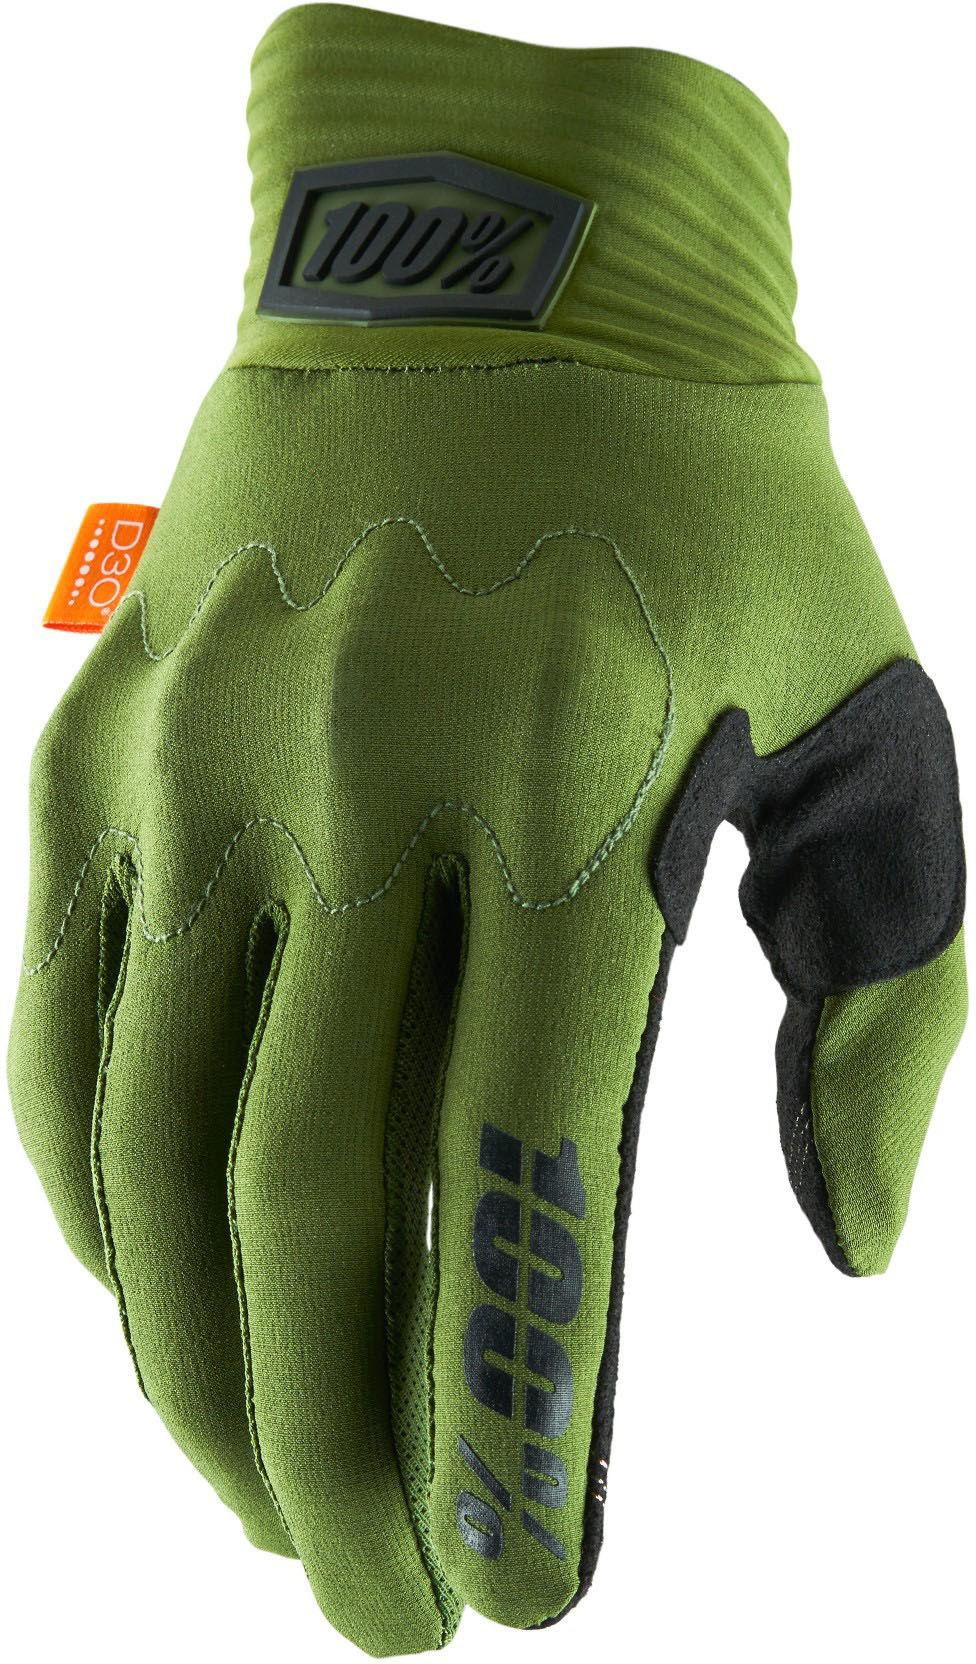 100% Brisker Gloves - Black-grey - Xl  Black-grey